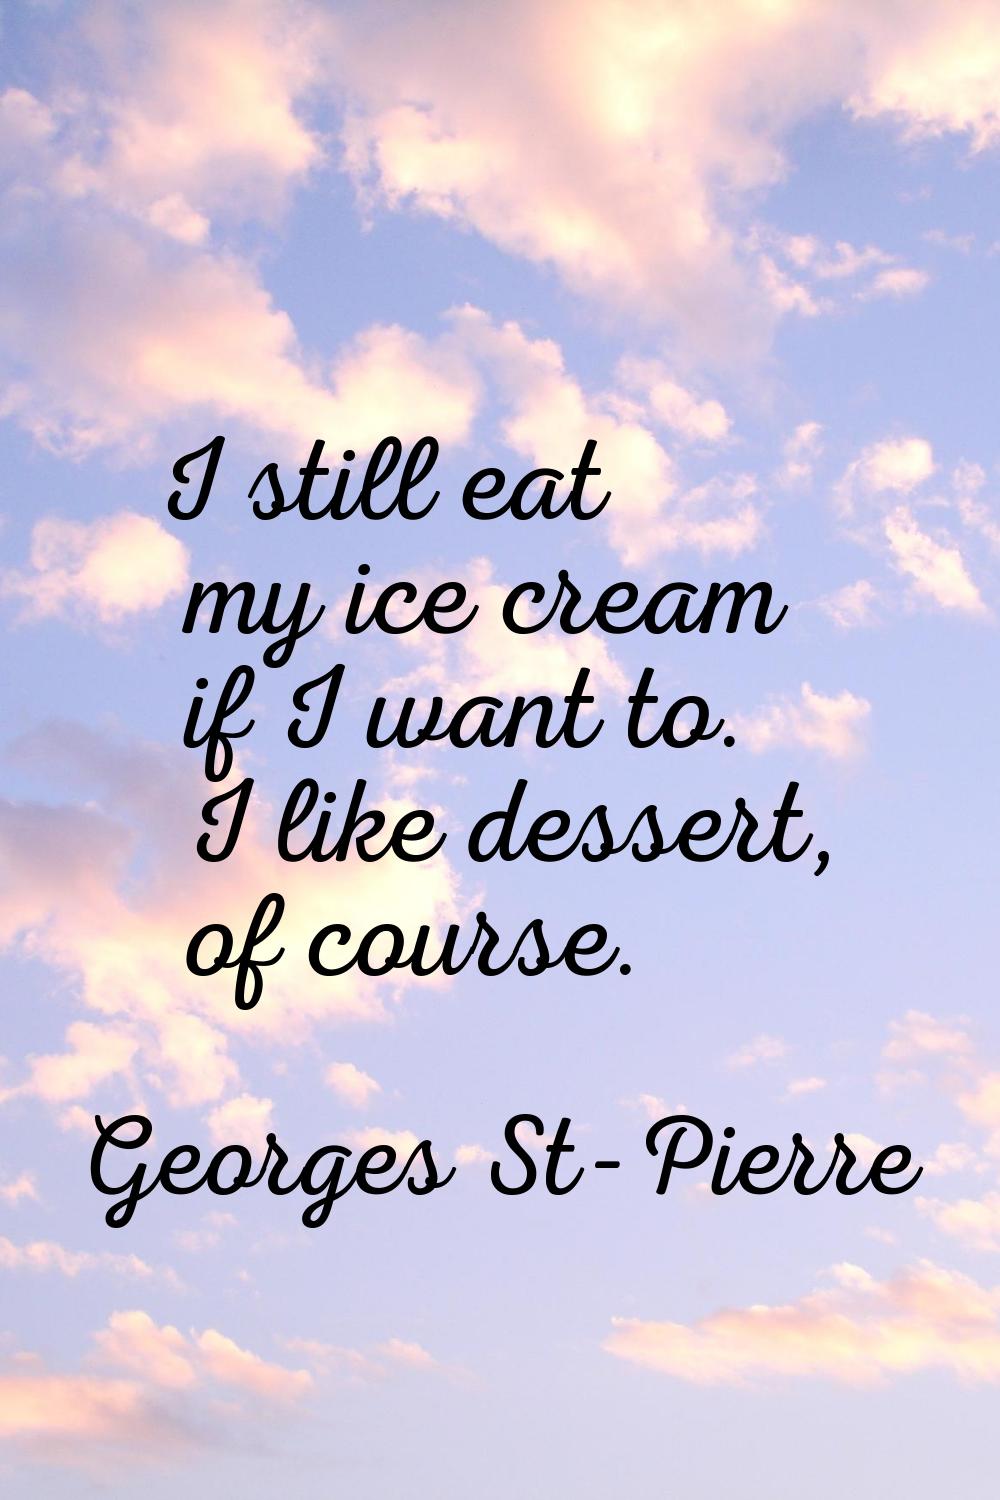 I still eat my ice cream if I want to. I like dessert, of course.